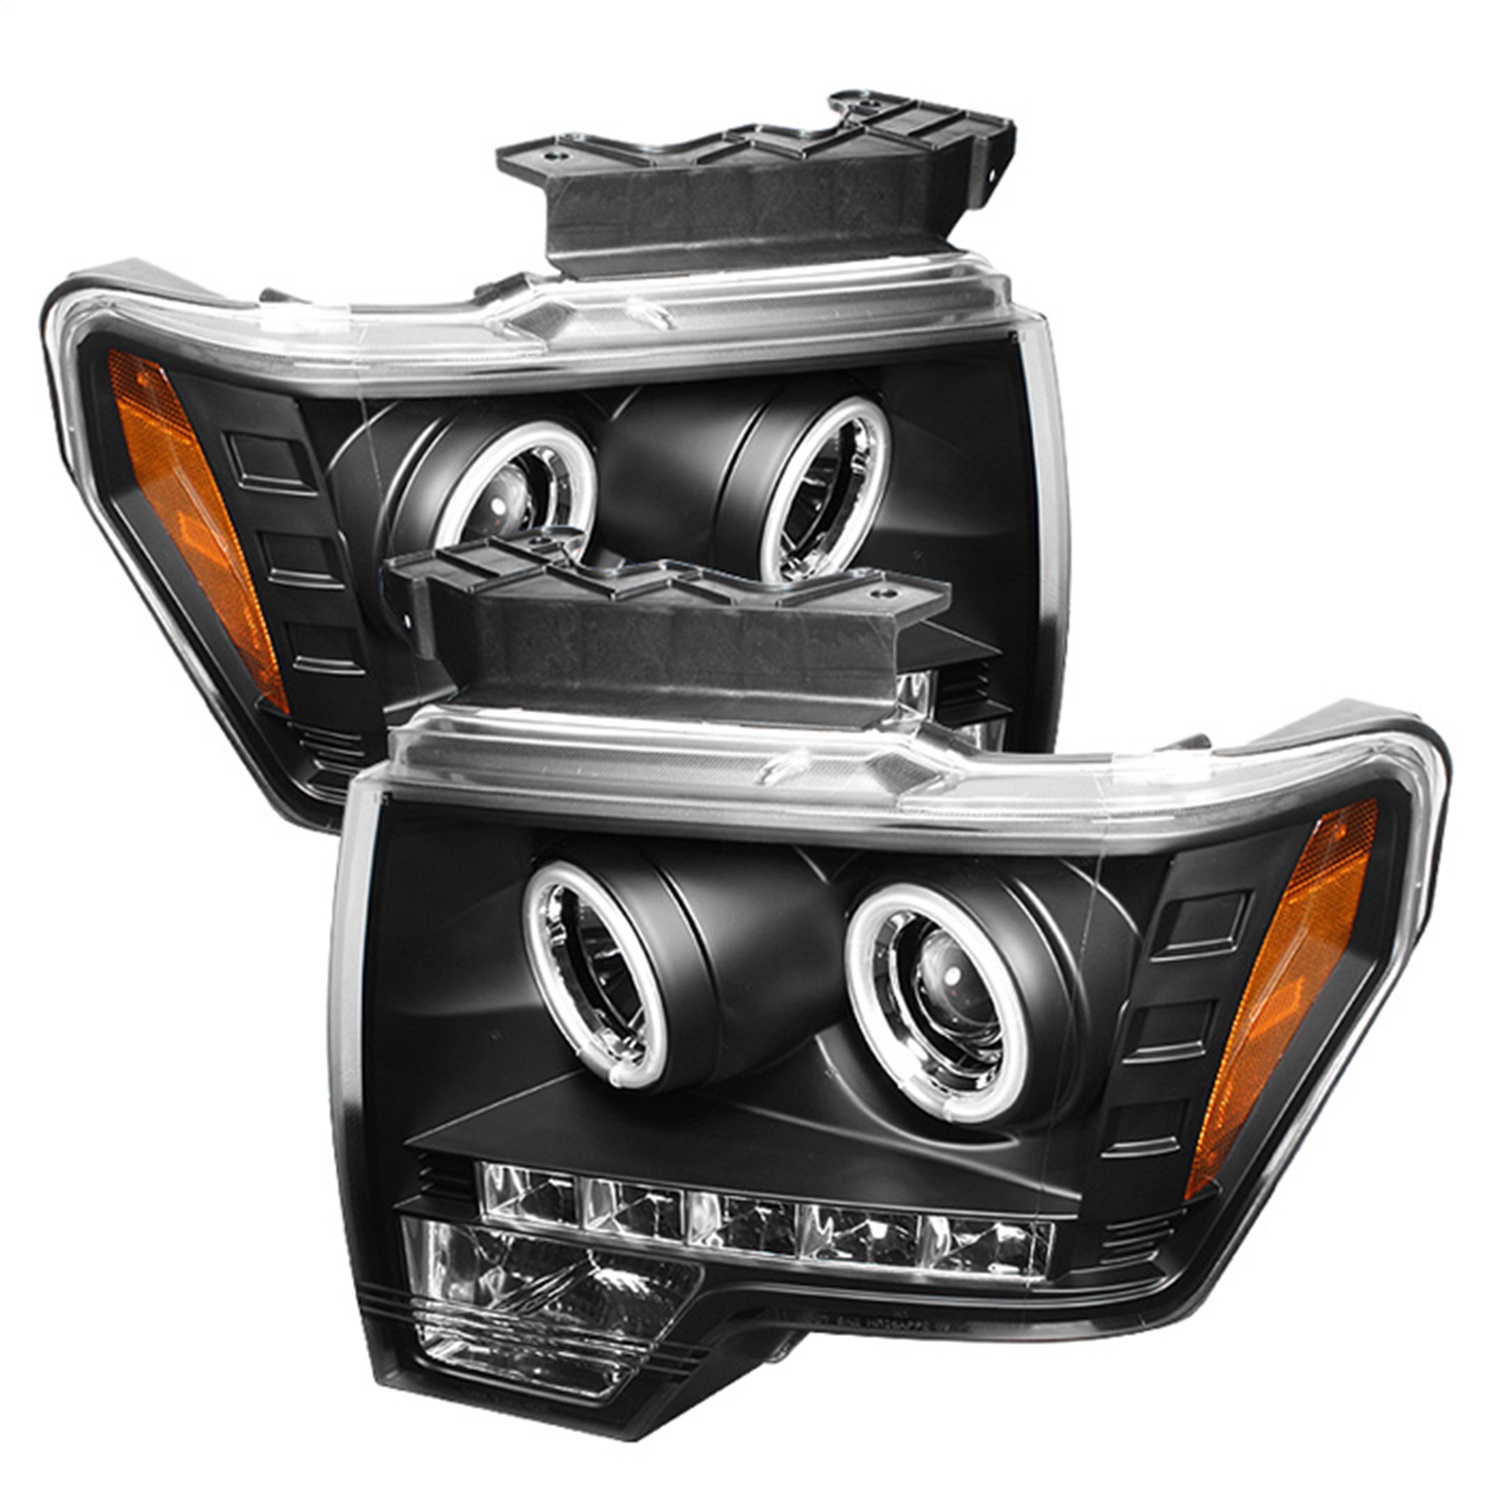 Spyder Auto 5030108 CCFL LED Projector Headlights Fits 09-14 F-150